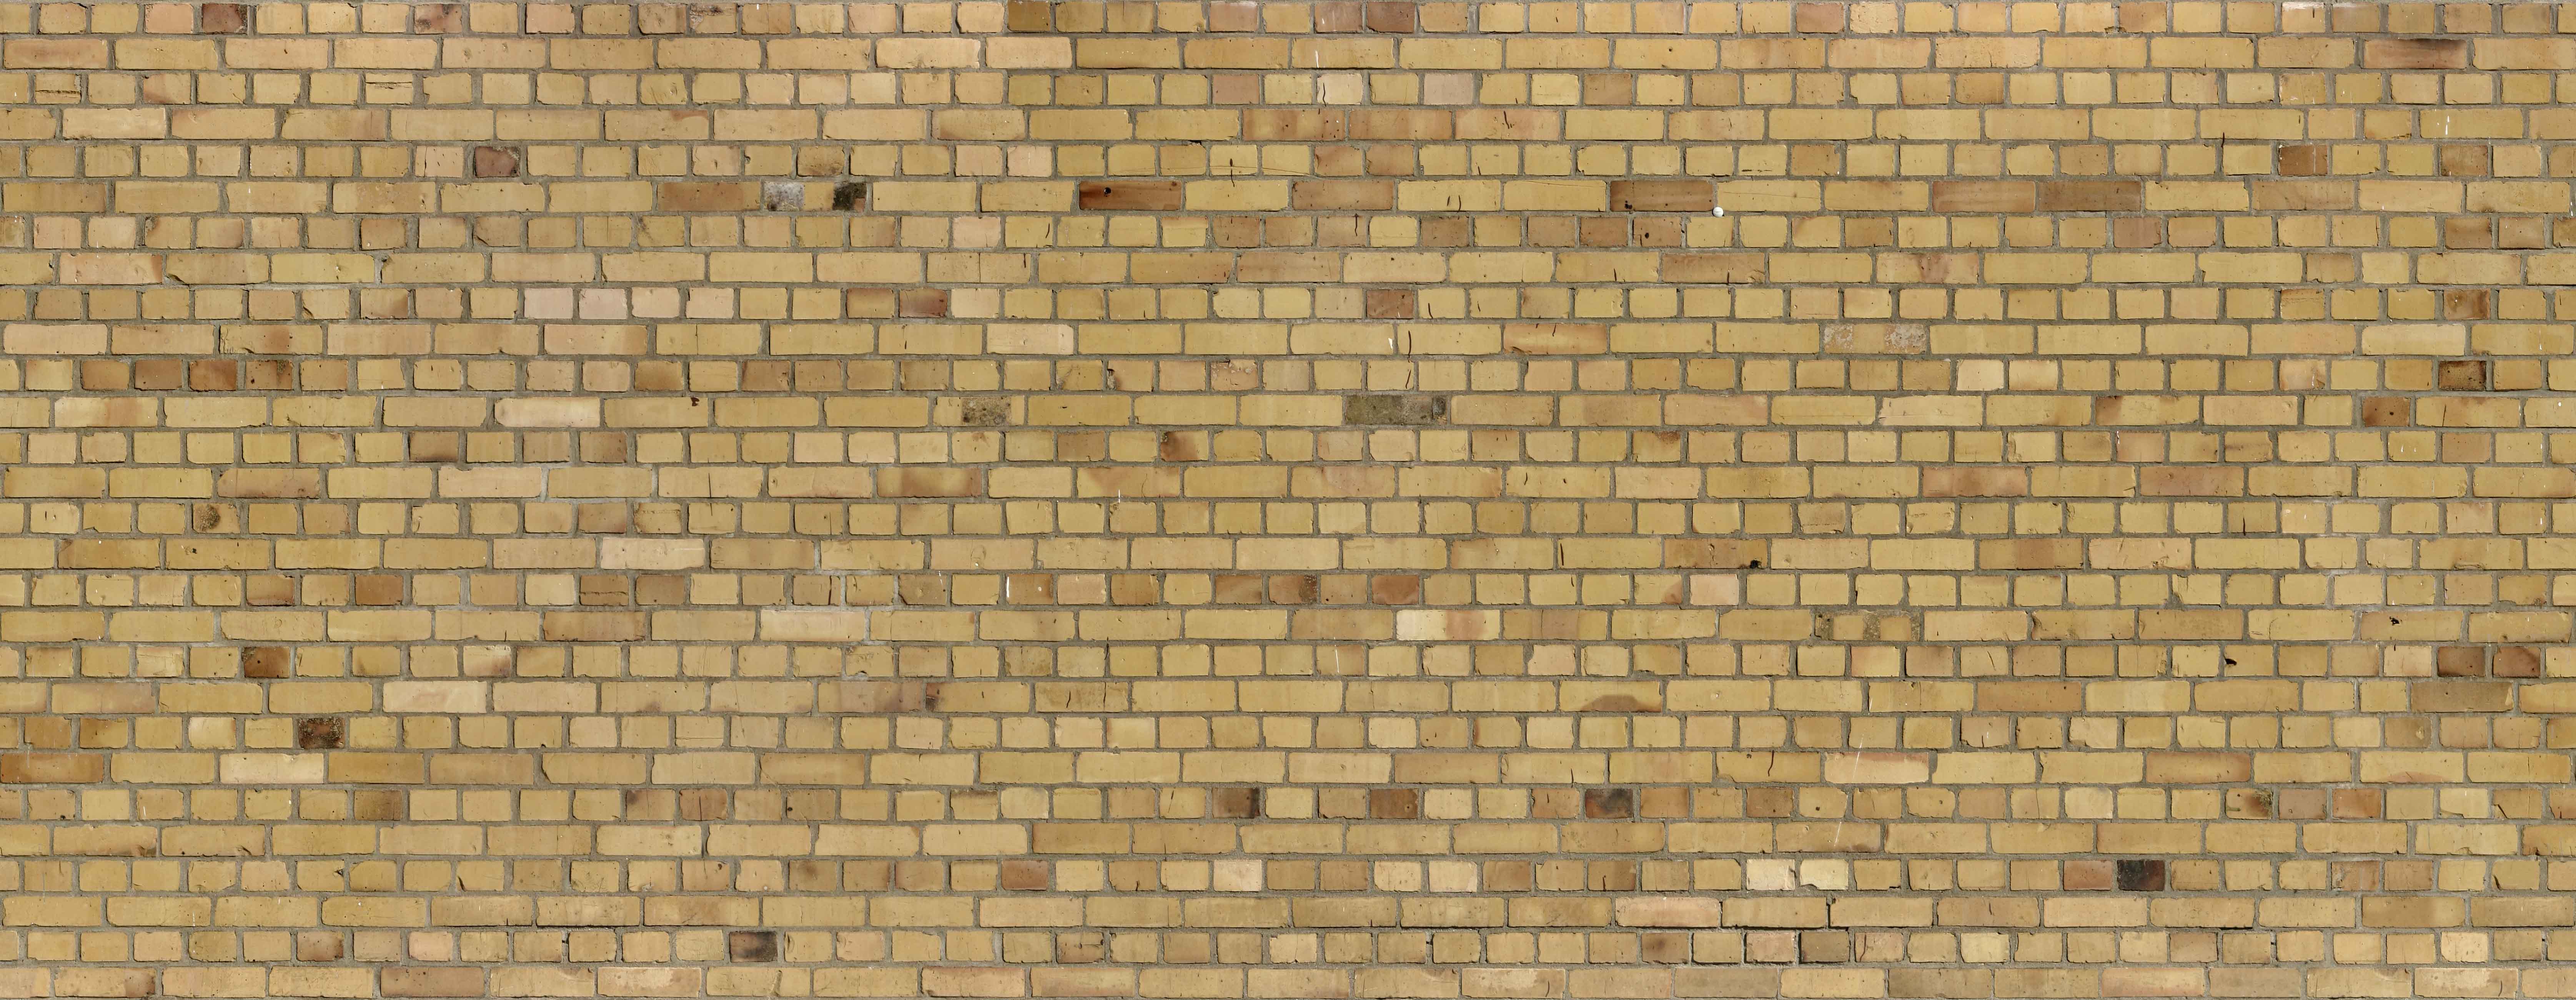 Brick Texture Seamless